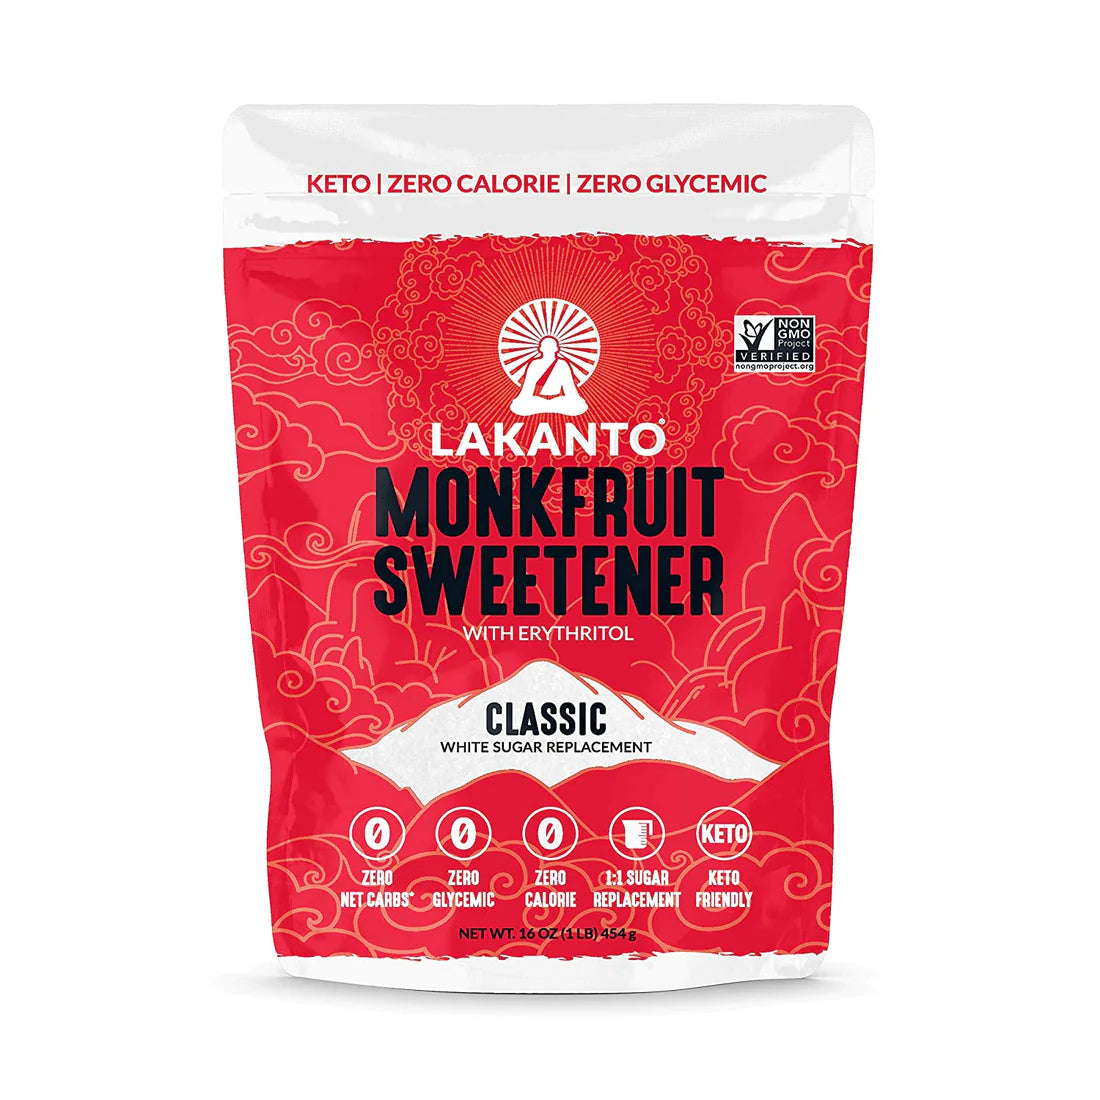 Lakanto Classic Monkfruit Sweetener